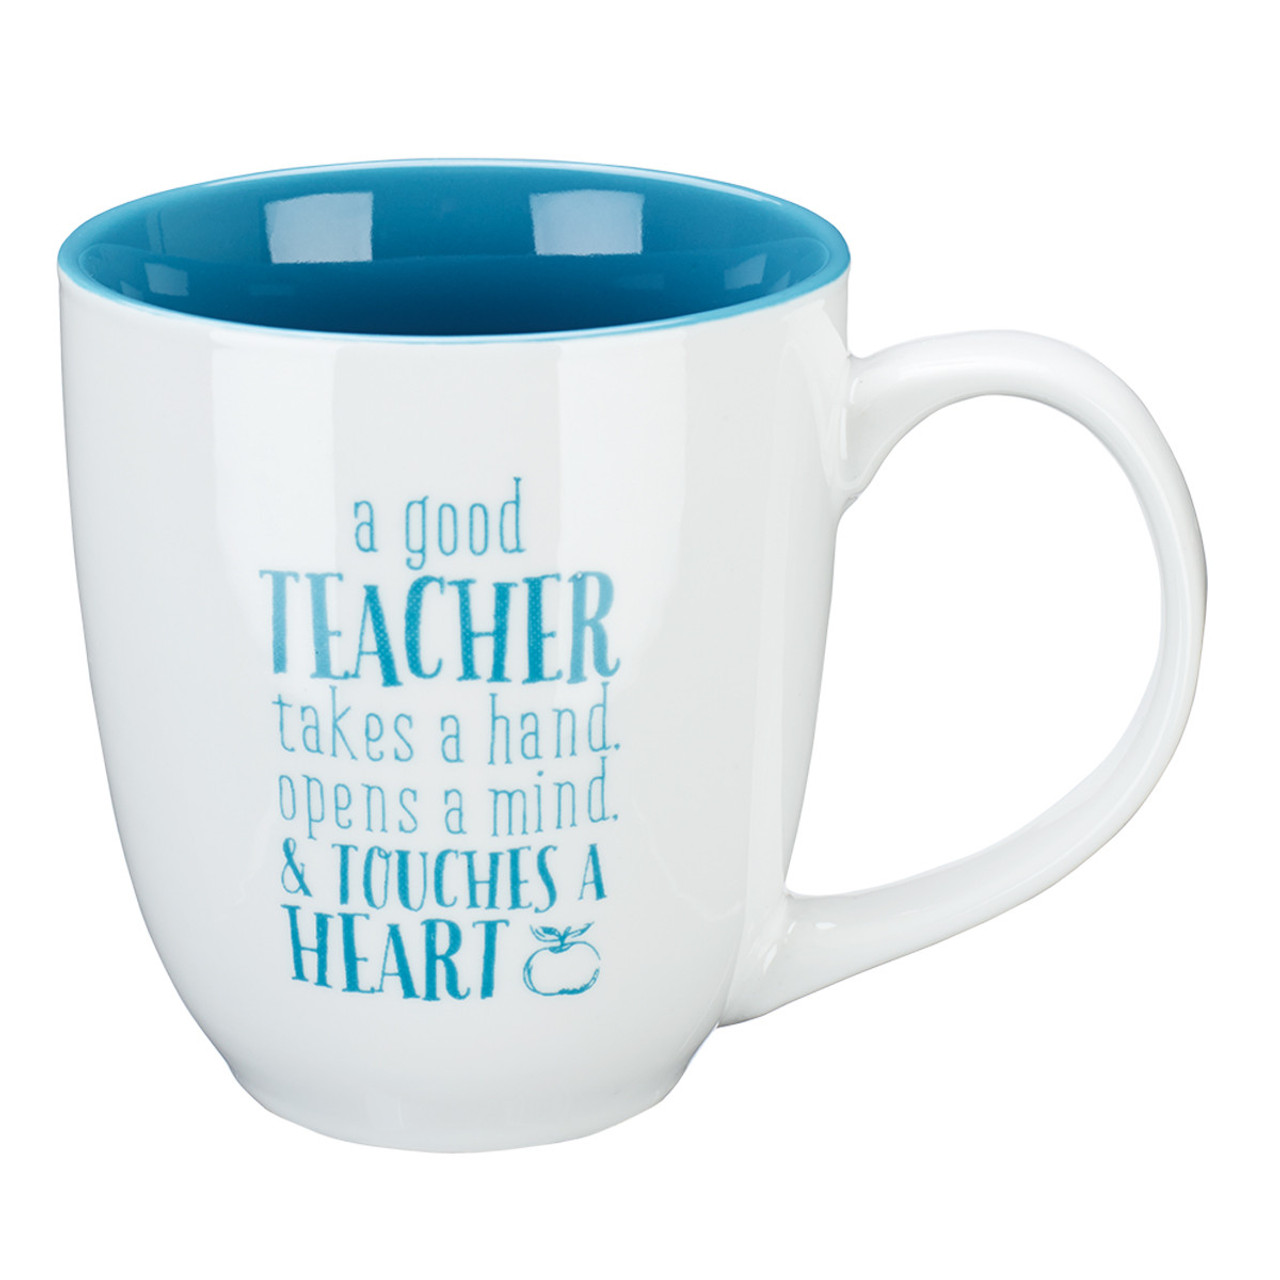 World's Best Teacher Ceramic Coffee Mug - Ecclesiastes 2:26